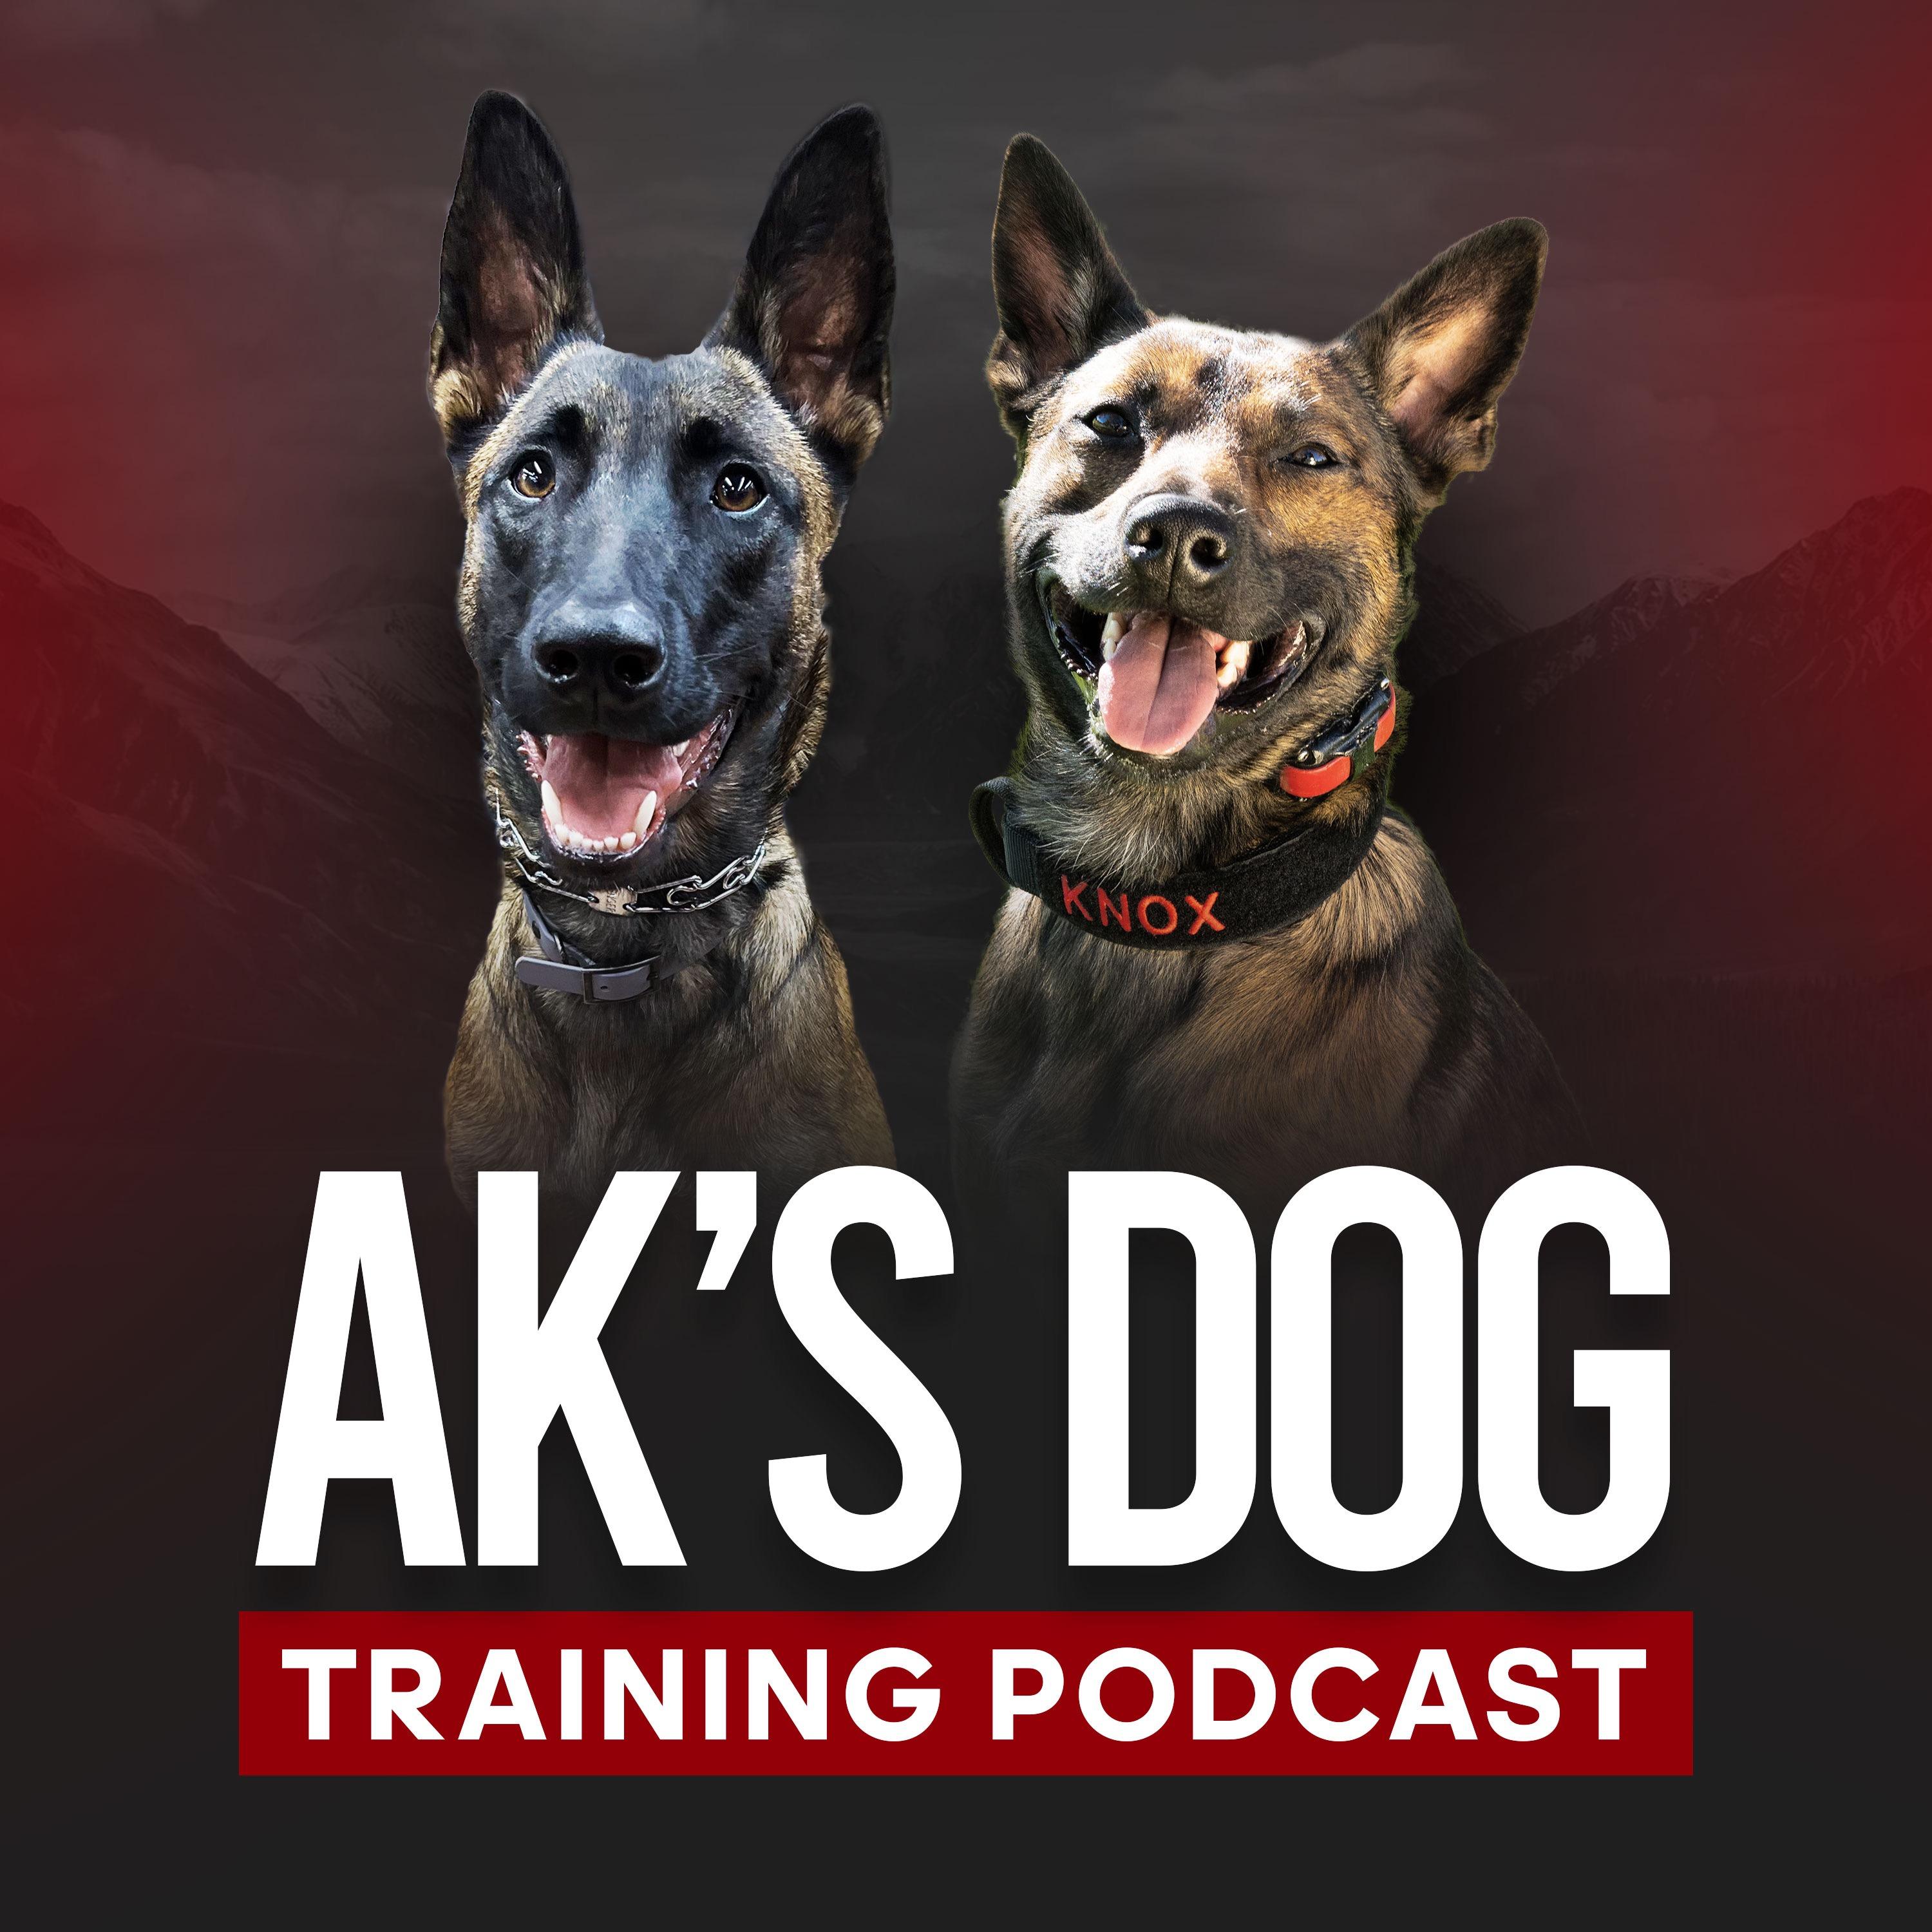 AK’S DOG TRAINING PODCAST